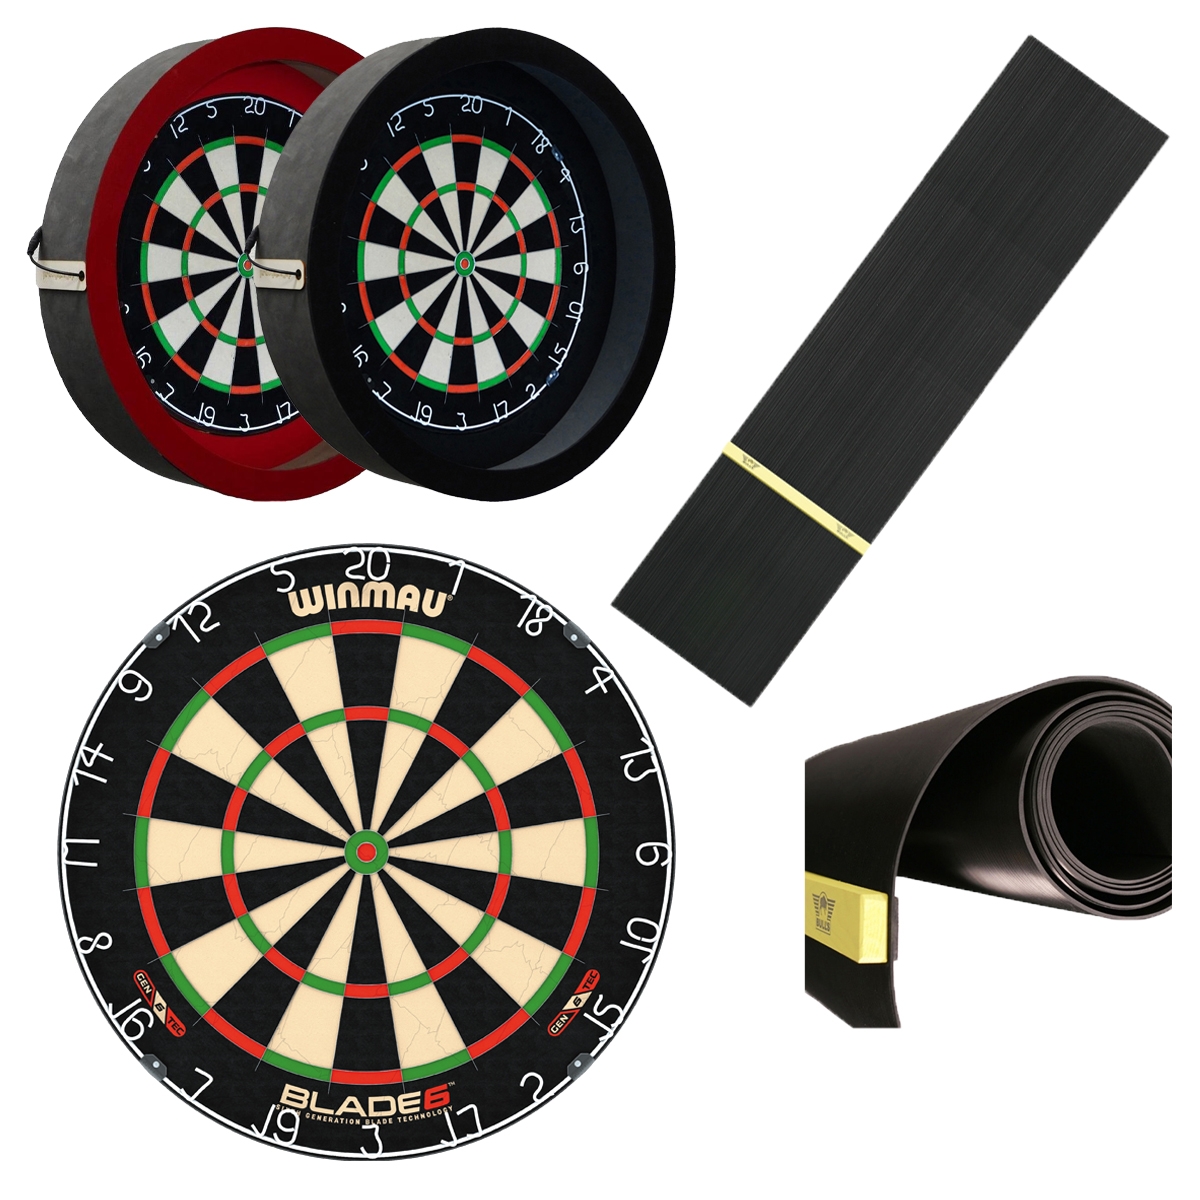 Stoffig Ambassade factor Dragon Darts - Winmau Blade 6 + dartbord verlichting + dartmat rubber  300*60 inclusief oche - deDartshop.nl